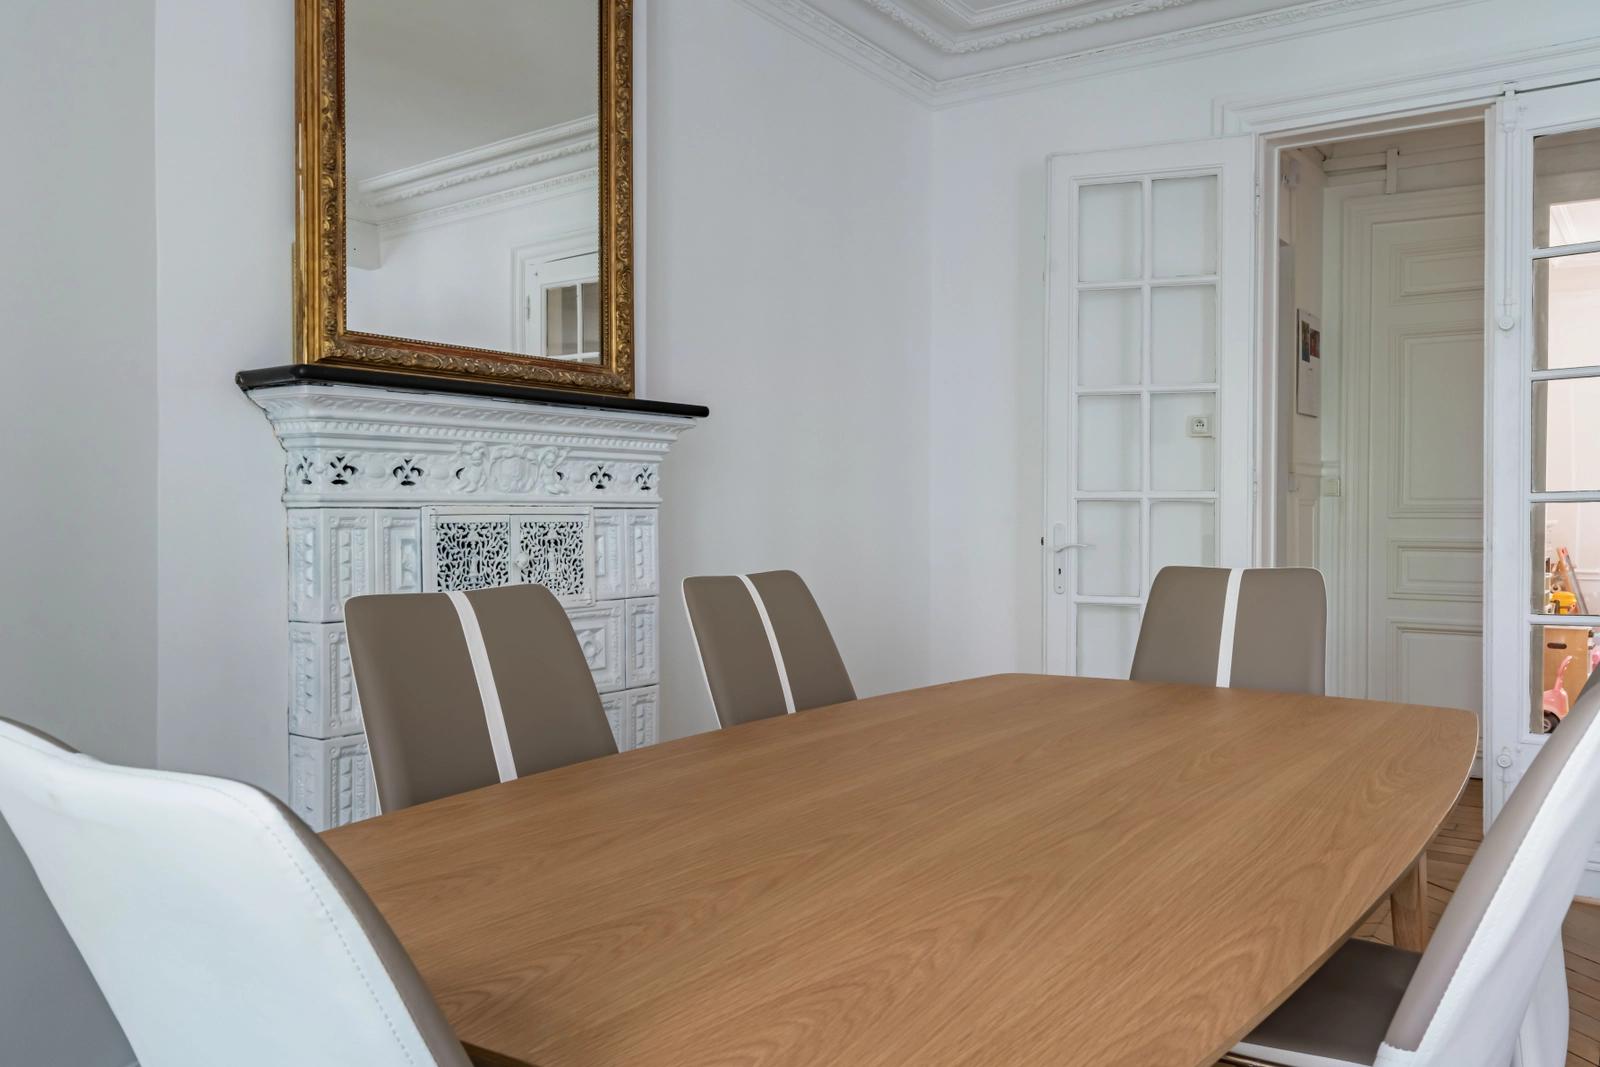 Meeting room in Beautiful Haussmann apartment - Paris 17th district - 5